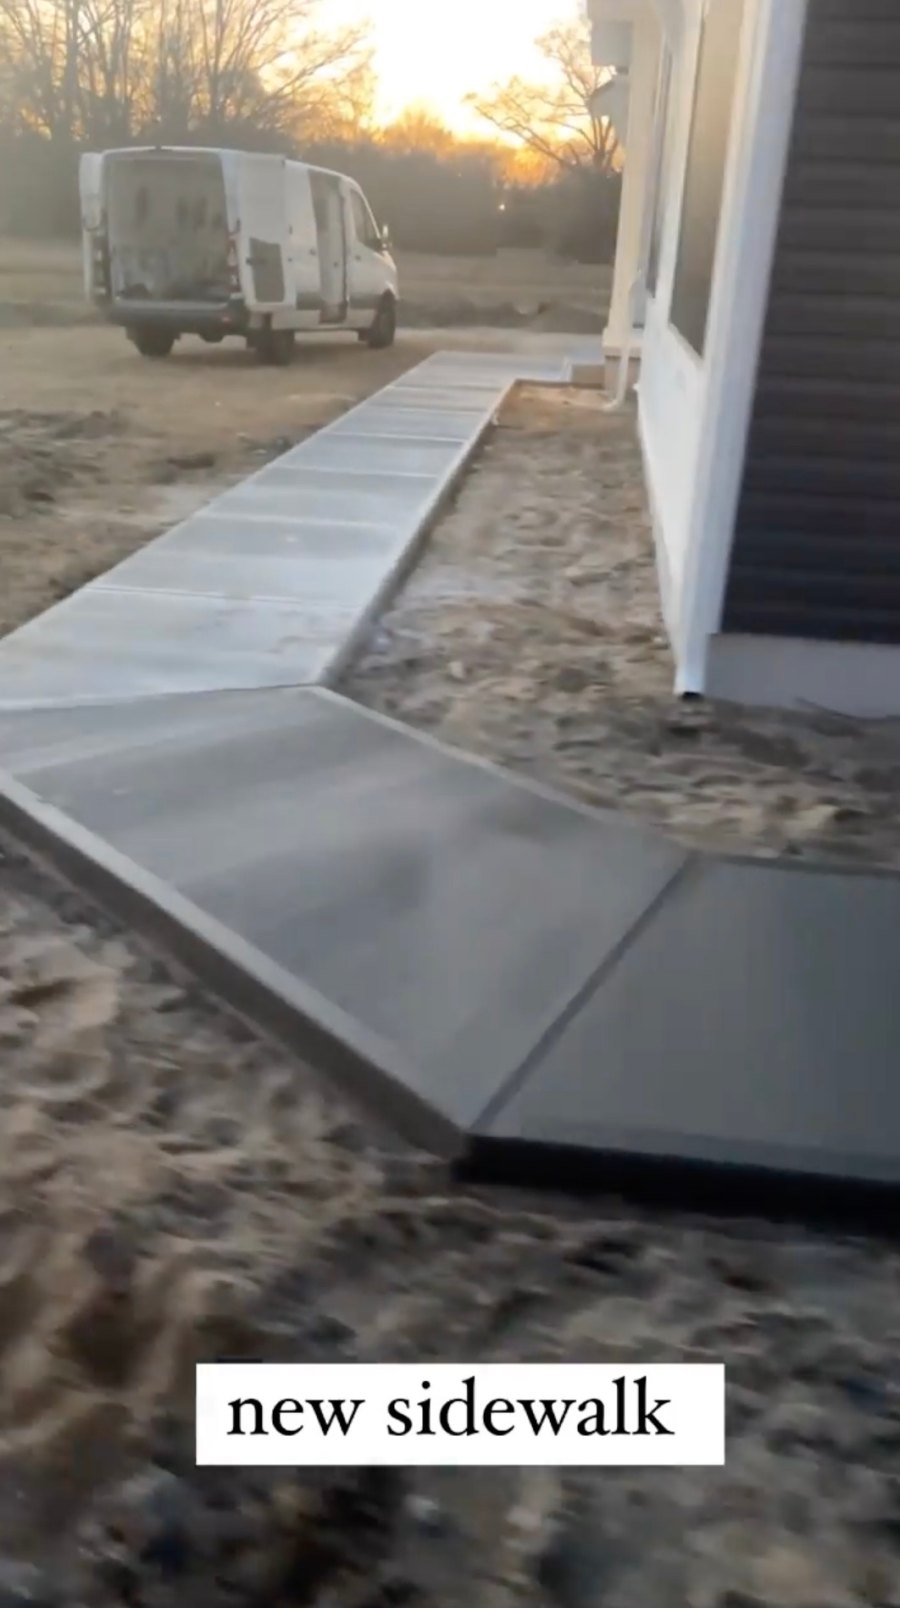 Sidewalk! Kitchen Tile! Teen Mom 2’s Kailyn Lowry Shows Home Build Progress